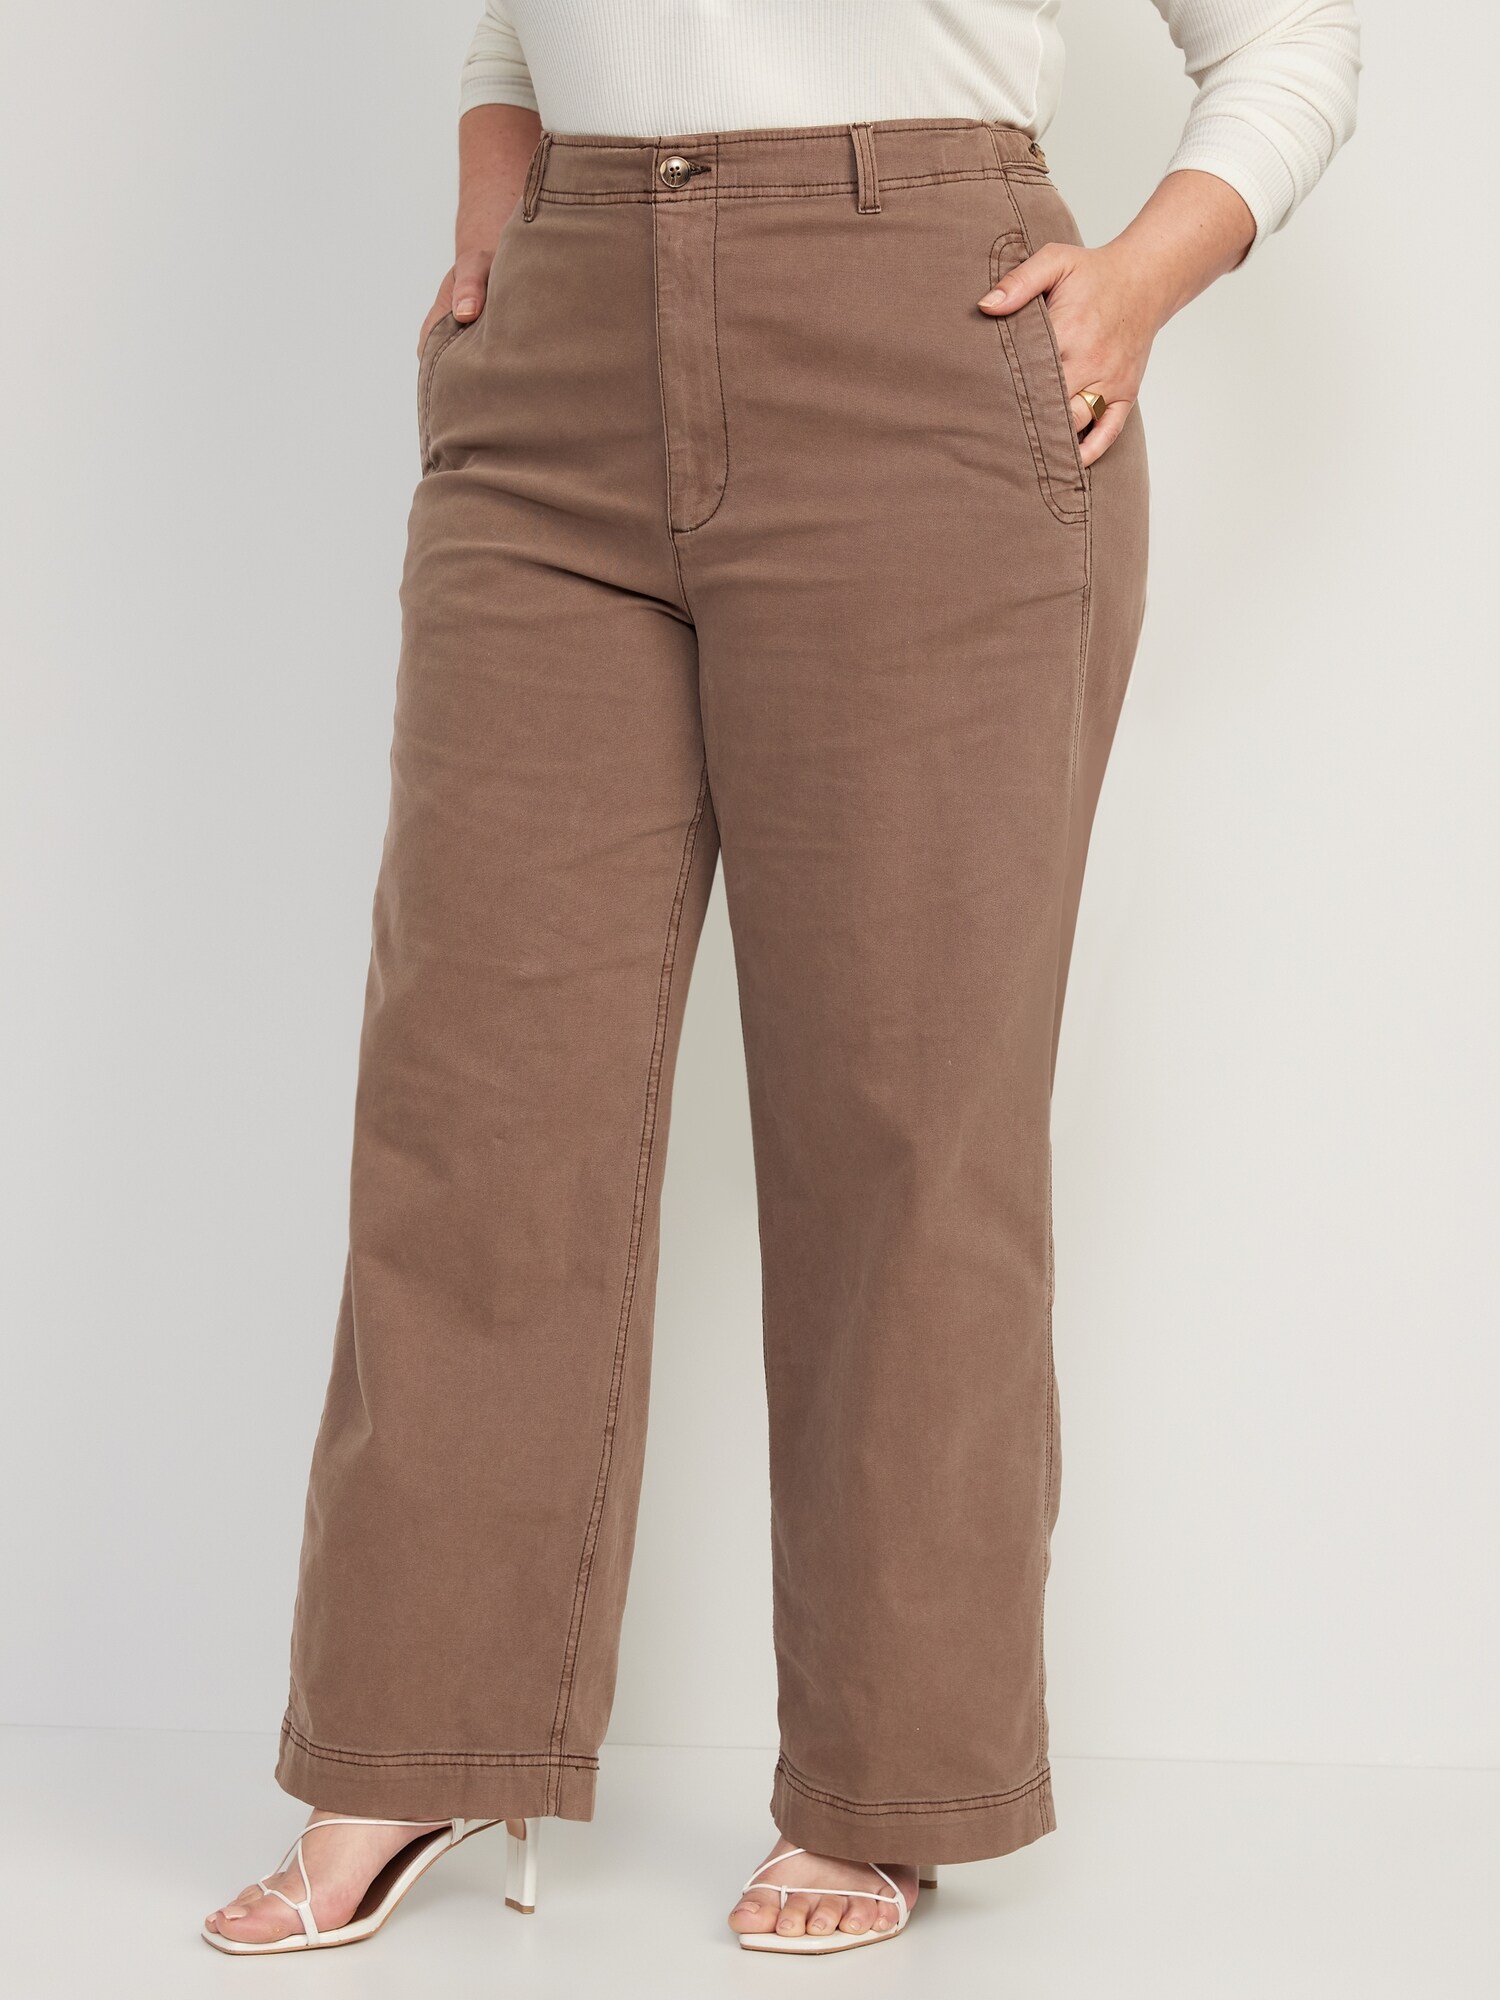 Buy Women's High Waist Tight-Fitting Hip-Length Pants Casual